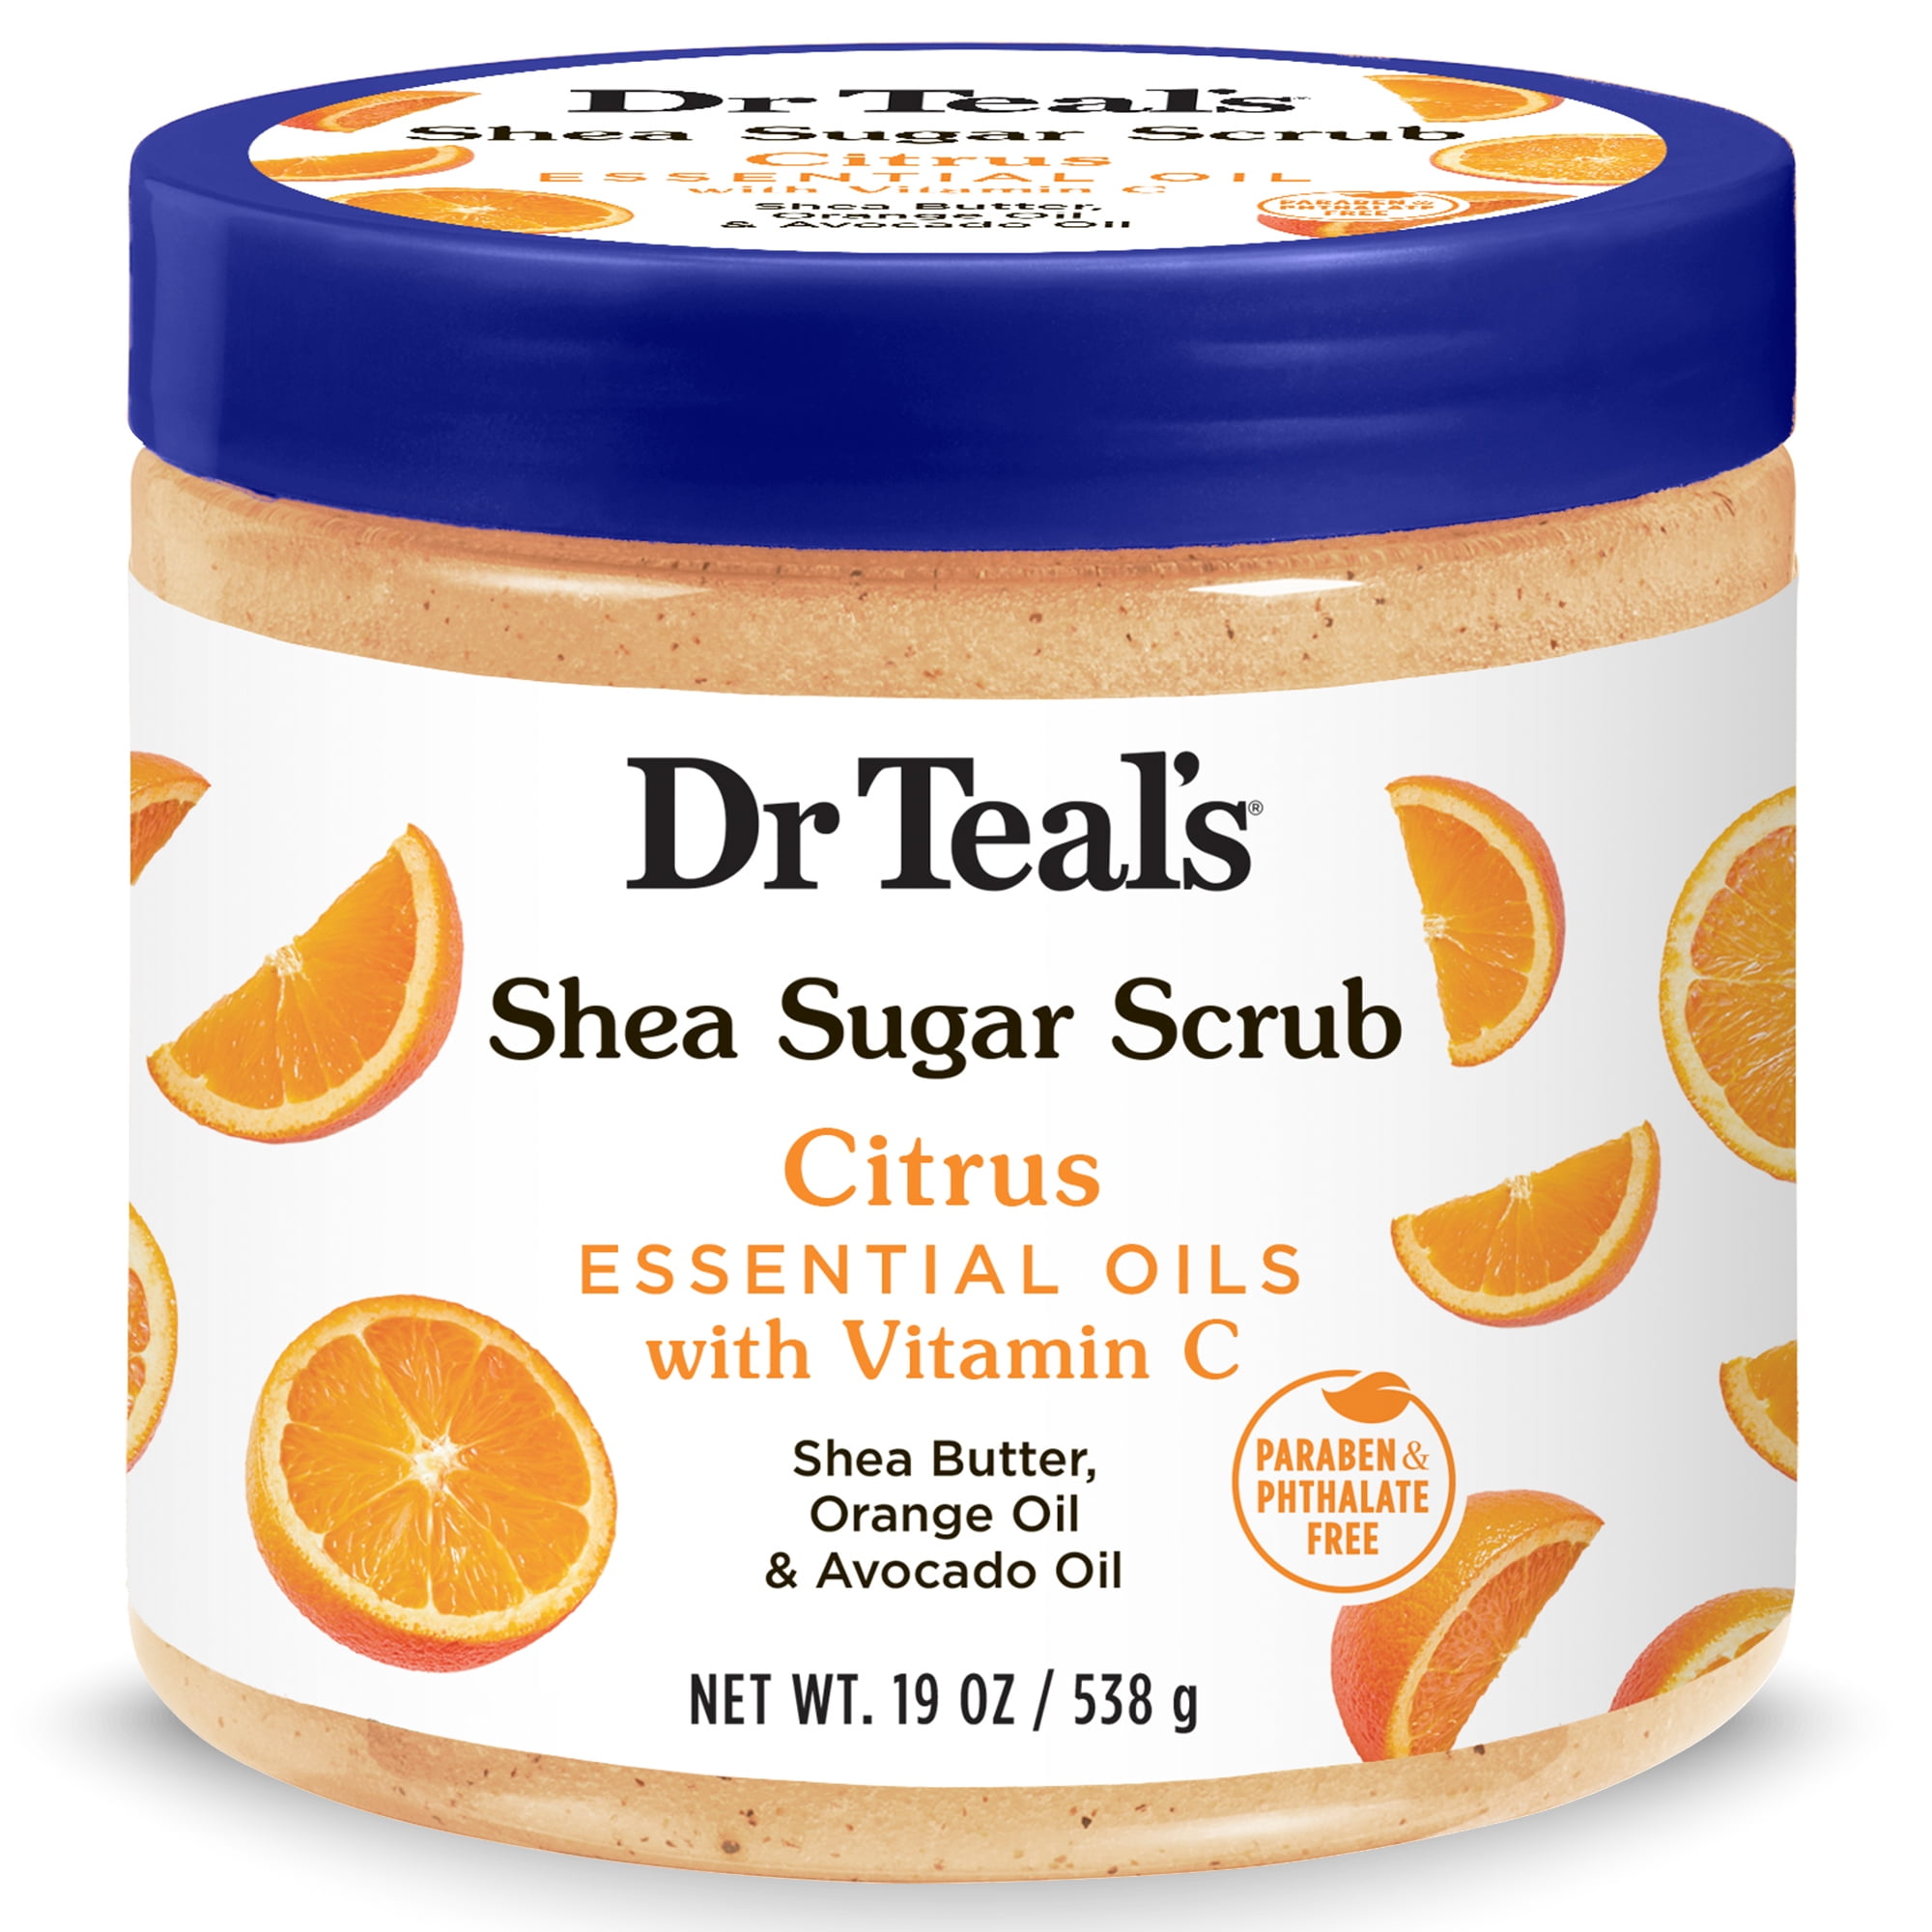 Dr Teal's Shea Sugar Body Scrub, Citrus with Essential Oils & Vitamin C, 19 oz